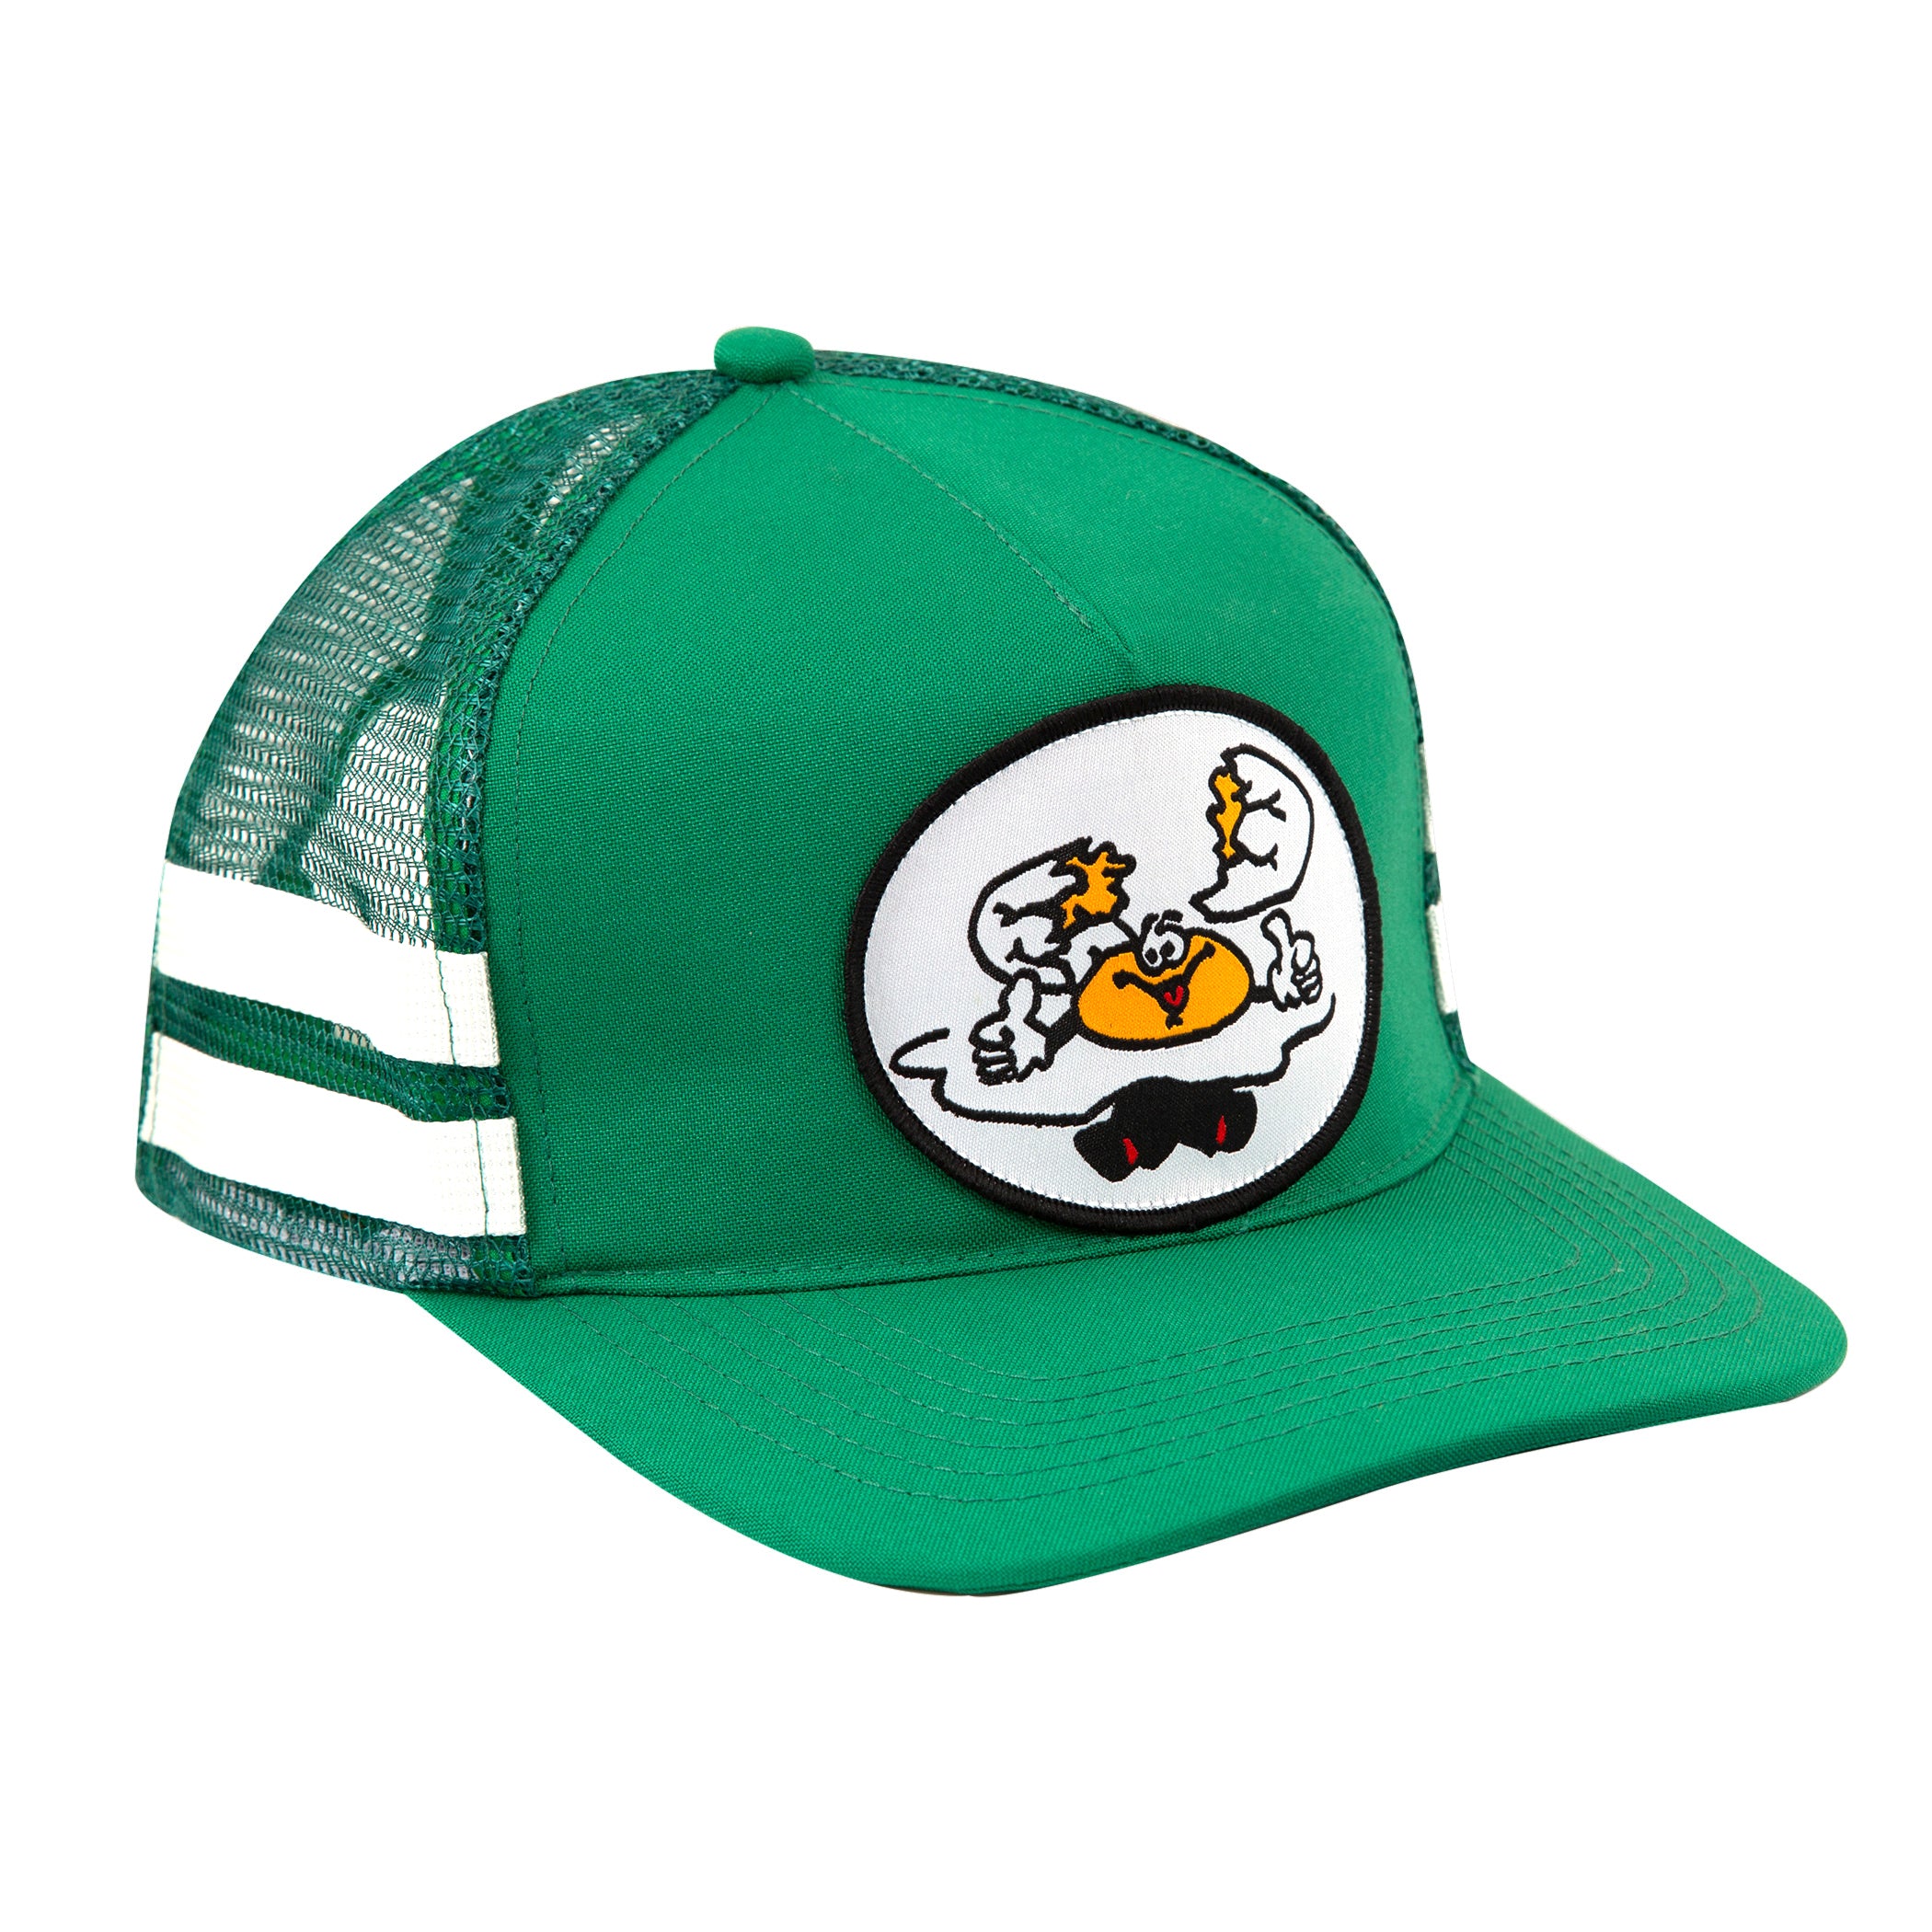 WKND Eggy Trucker Hat Green - Orchard Skateshop